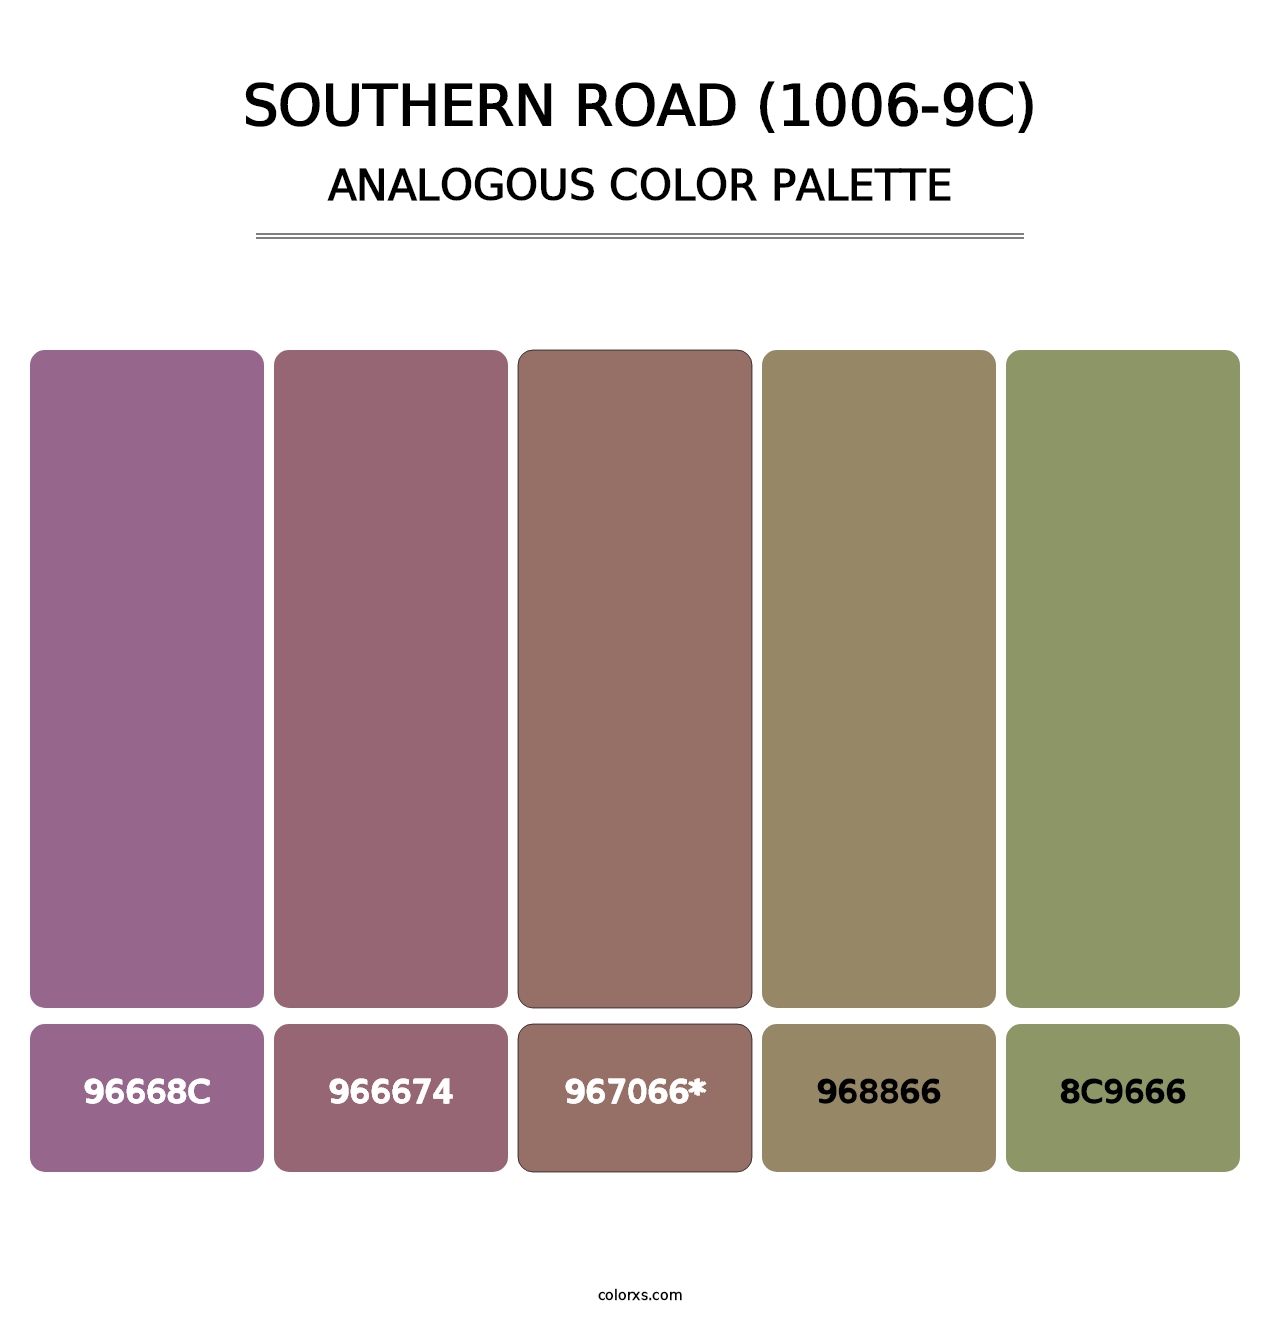 Southern Road (1006-9C) - Analogous Color Palette